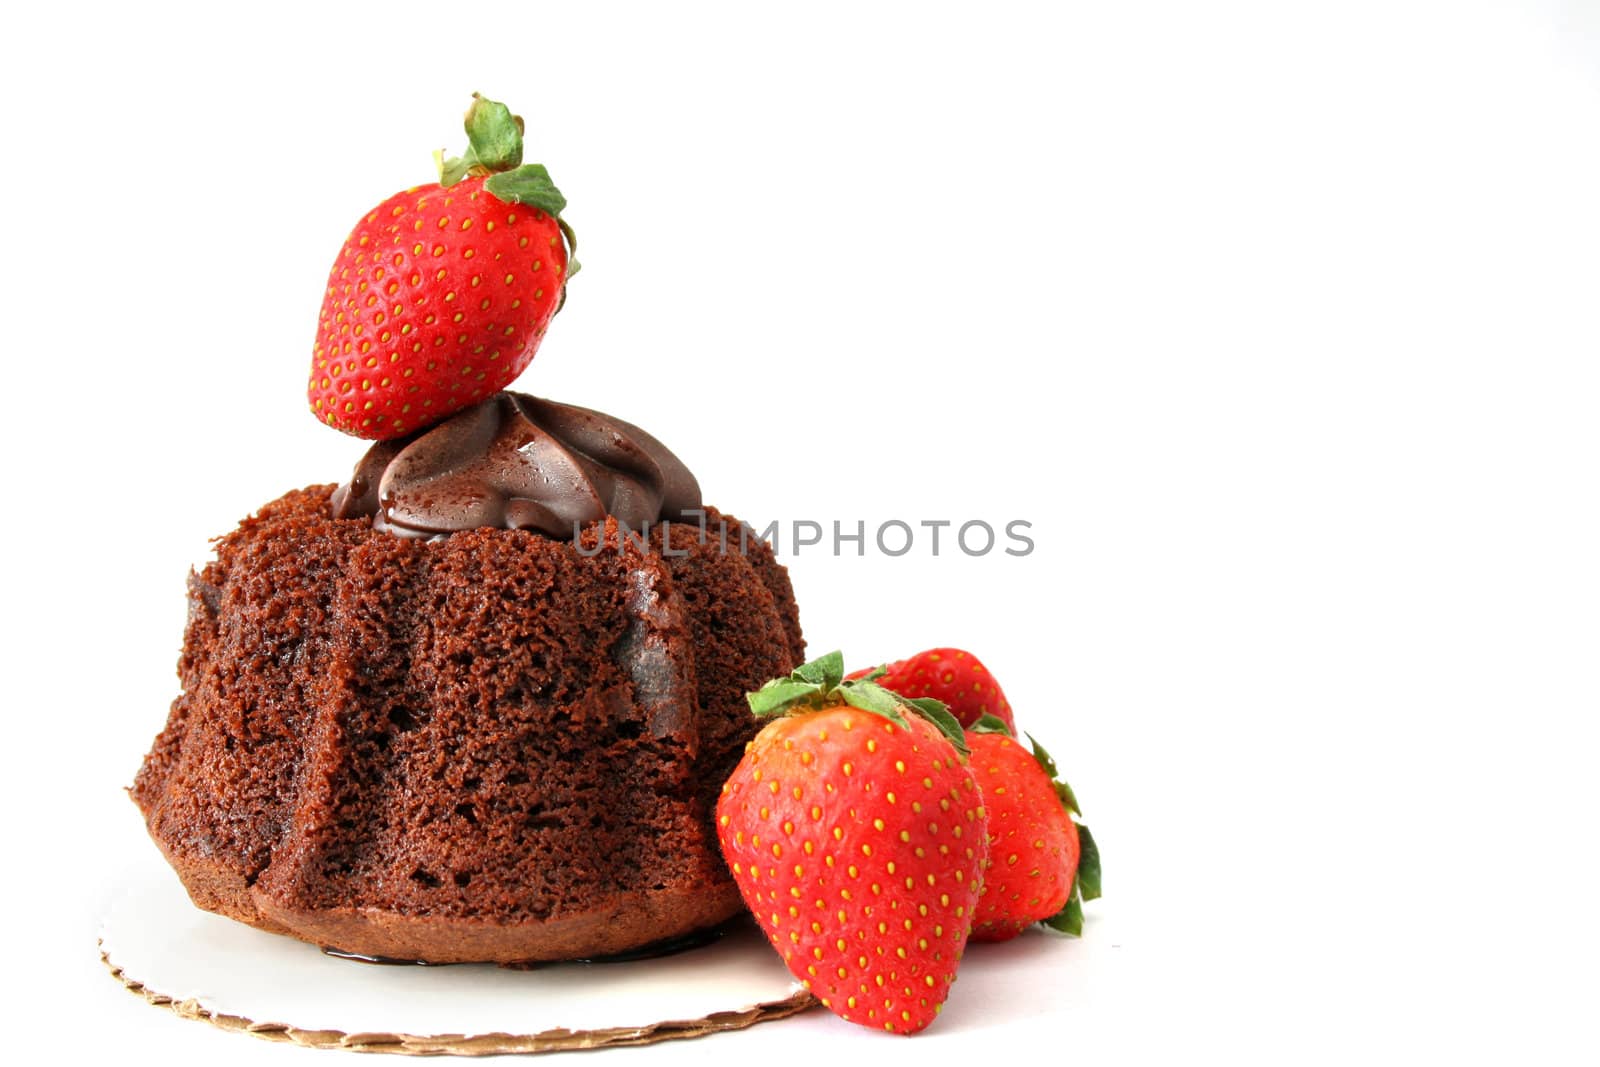 Chocolate Dessert by thephotoguy